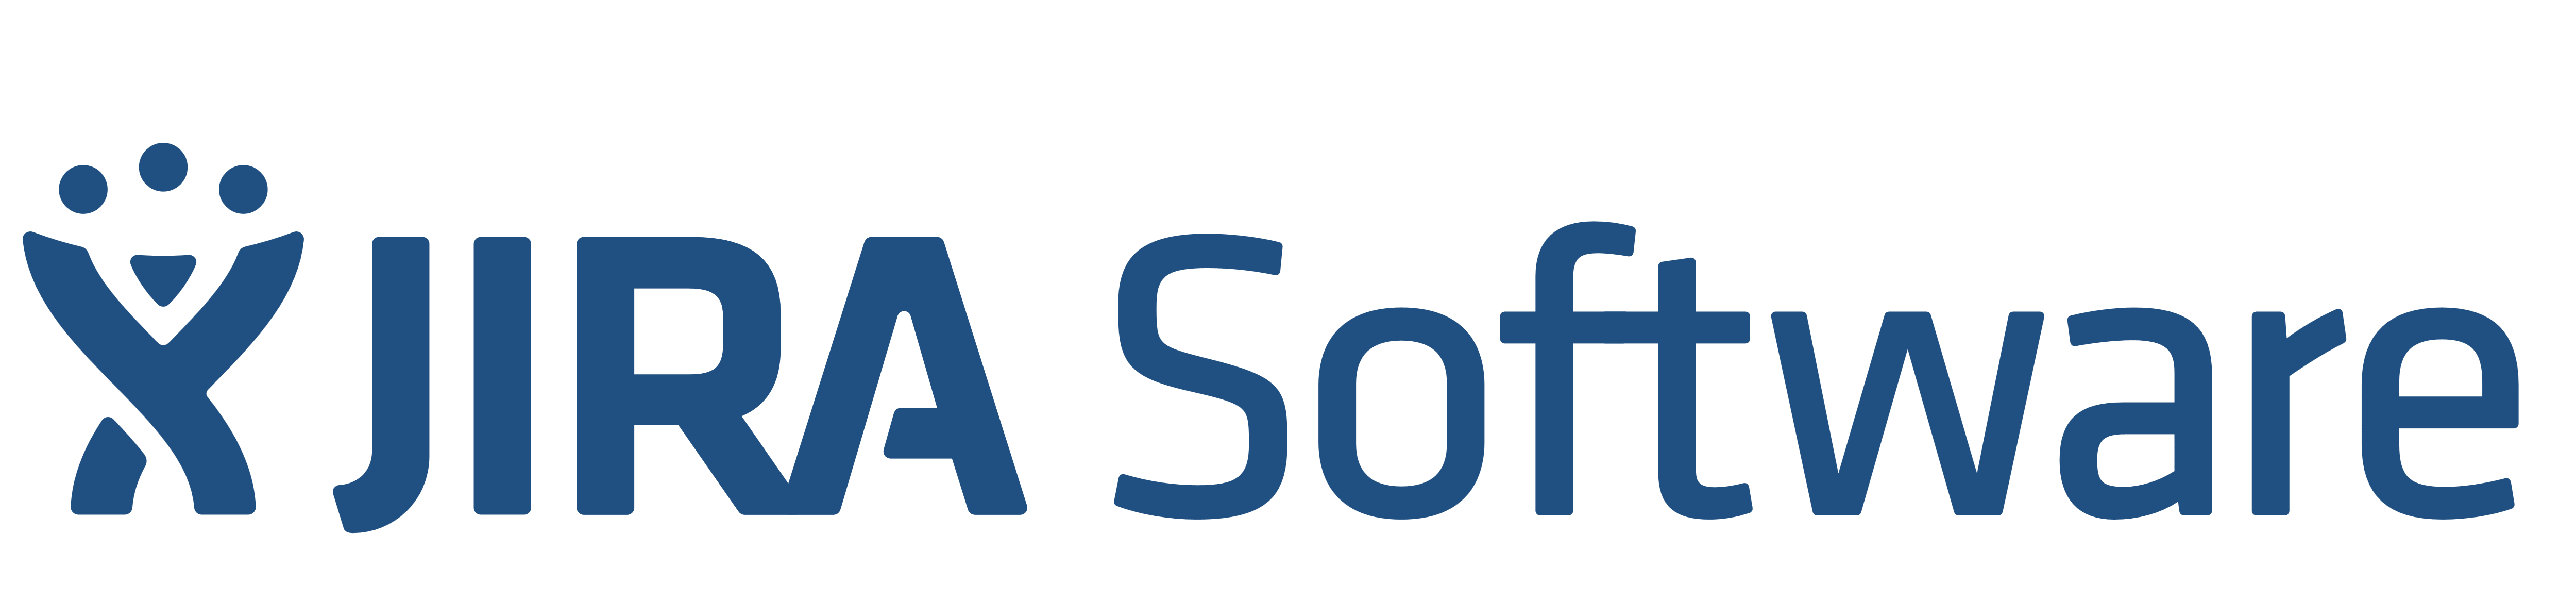 Martech-Jira-Software-Logo